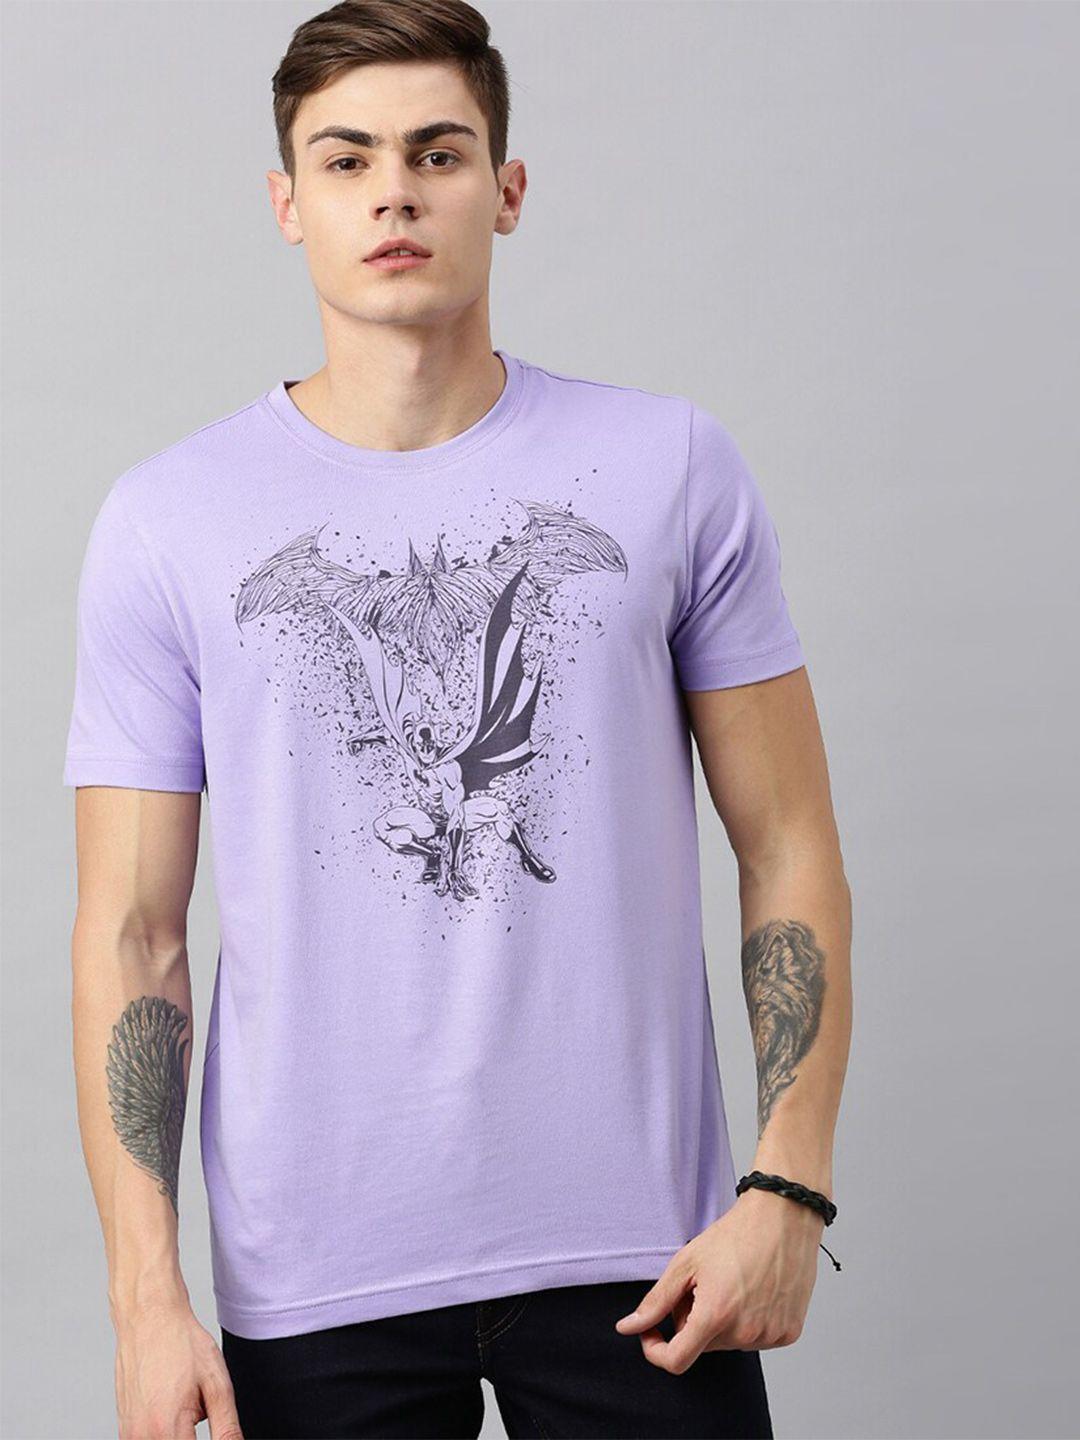 kook n keech batman men violet printed cotton t-shirt